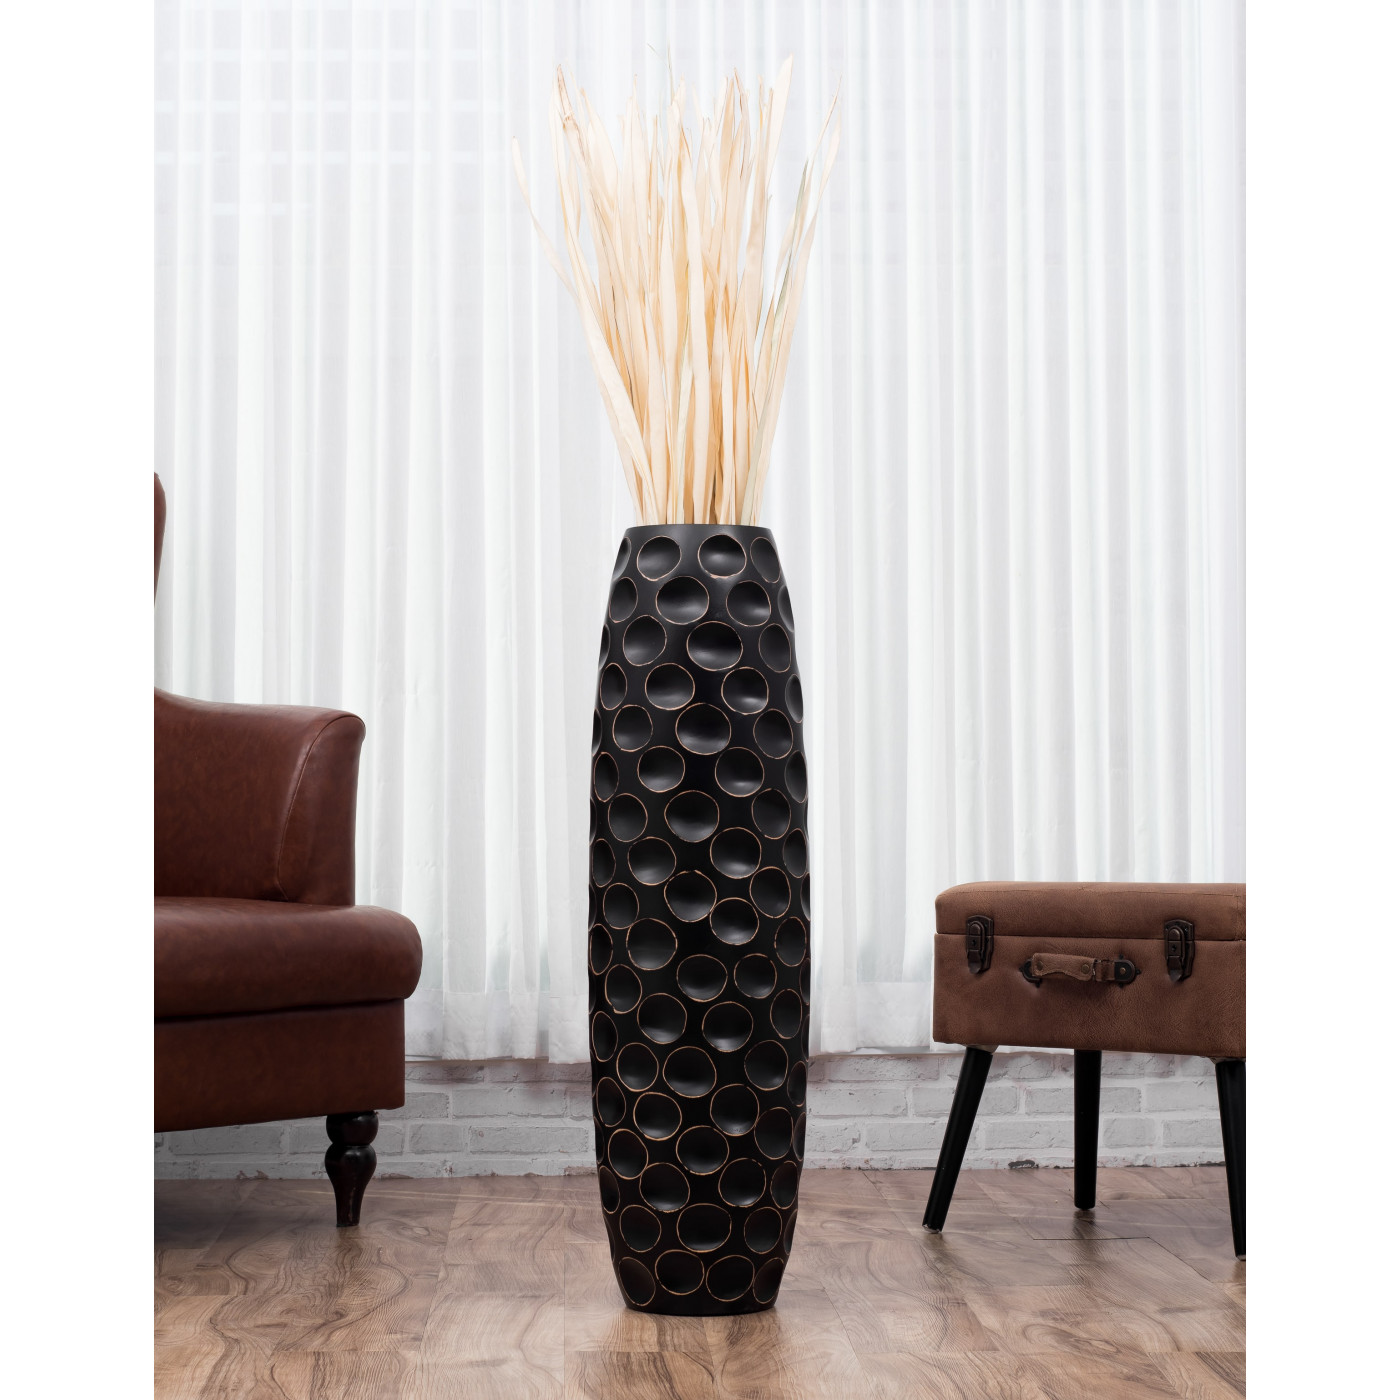 5x30 inches Leewadee Tall Big Floor Standing Vase For Home Decor Wood black